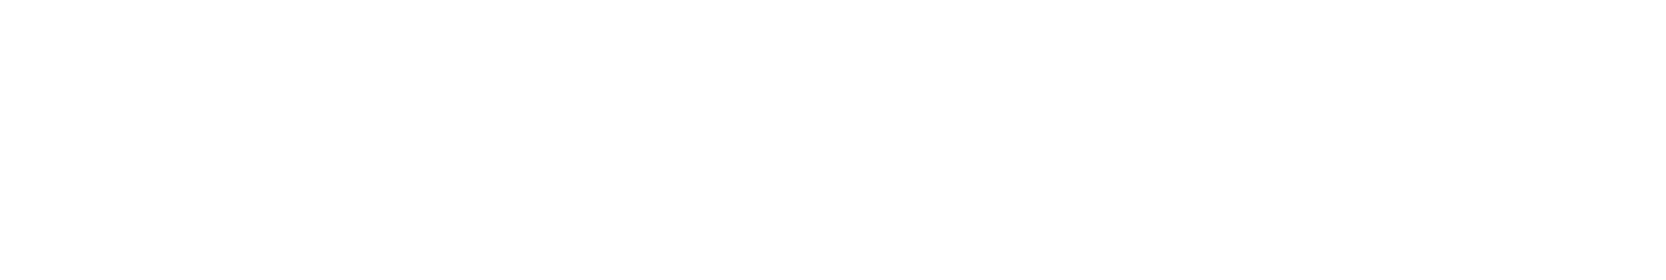 Regions Financial
 logo large for dark backgrounds (transparent PNG)